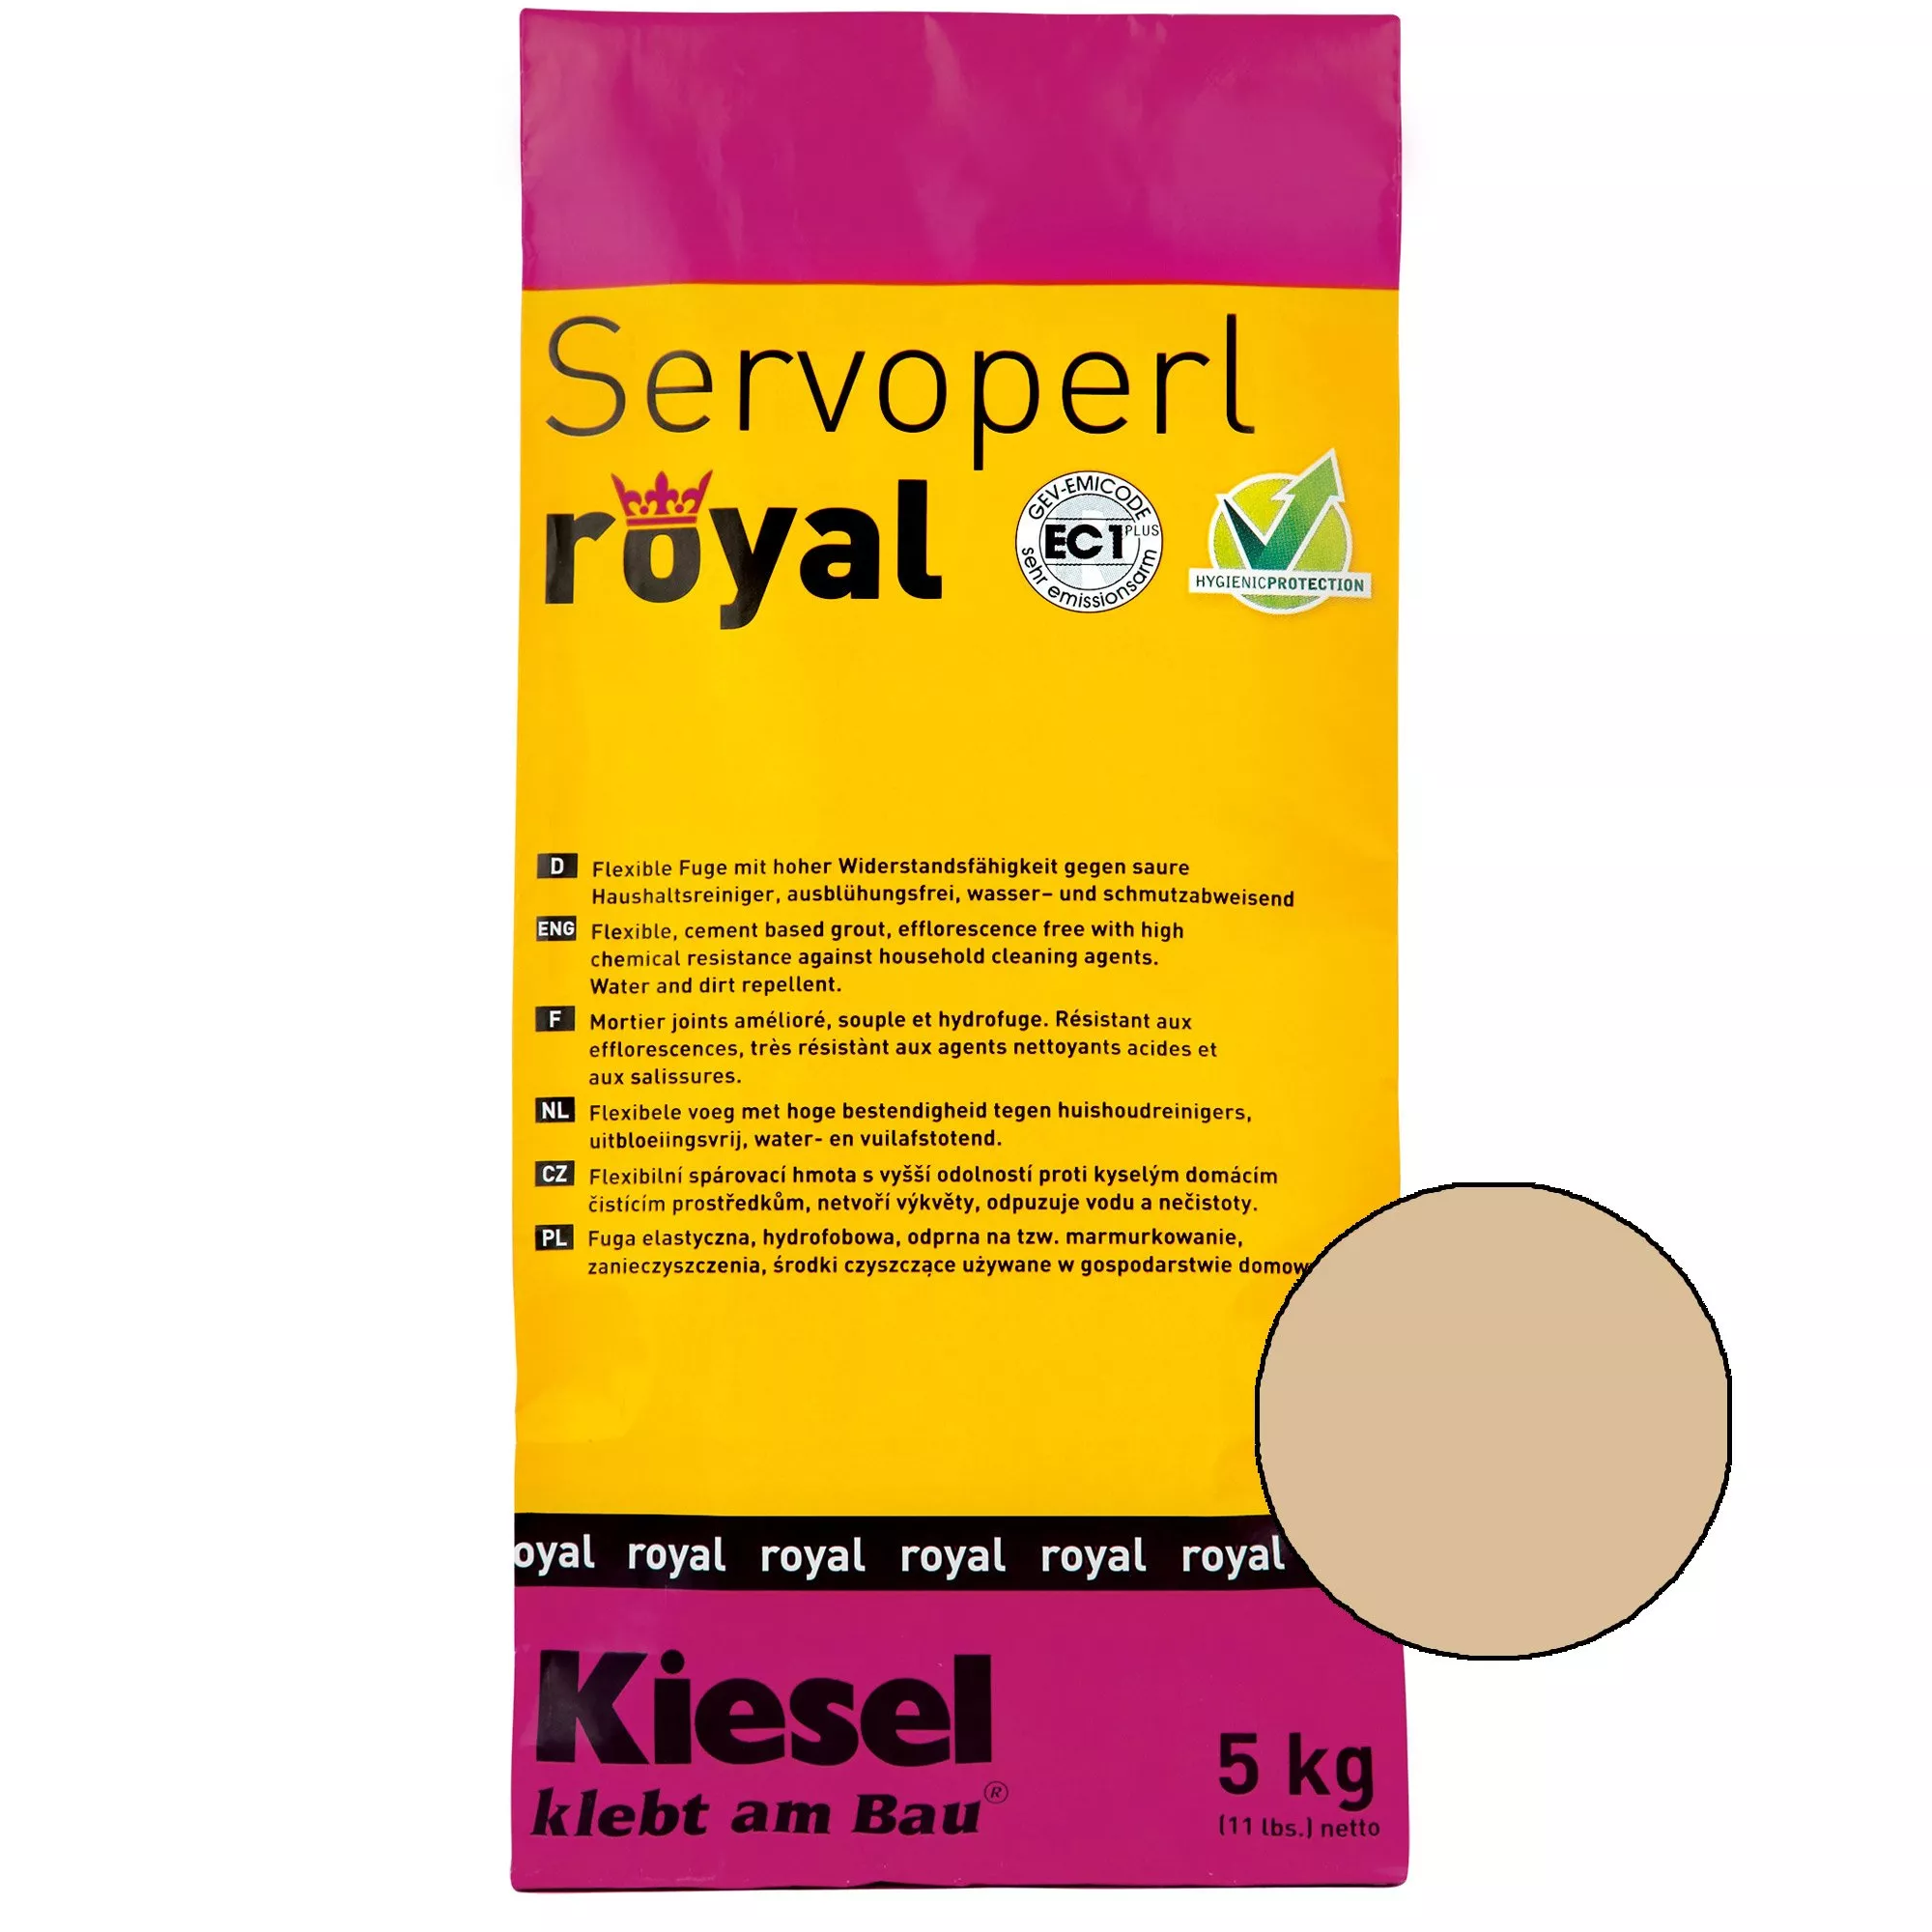 Kiesel Servoperl royal - compus pentru rosturi - 5 kg Safari Sand